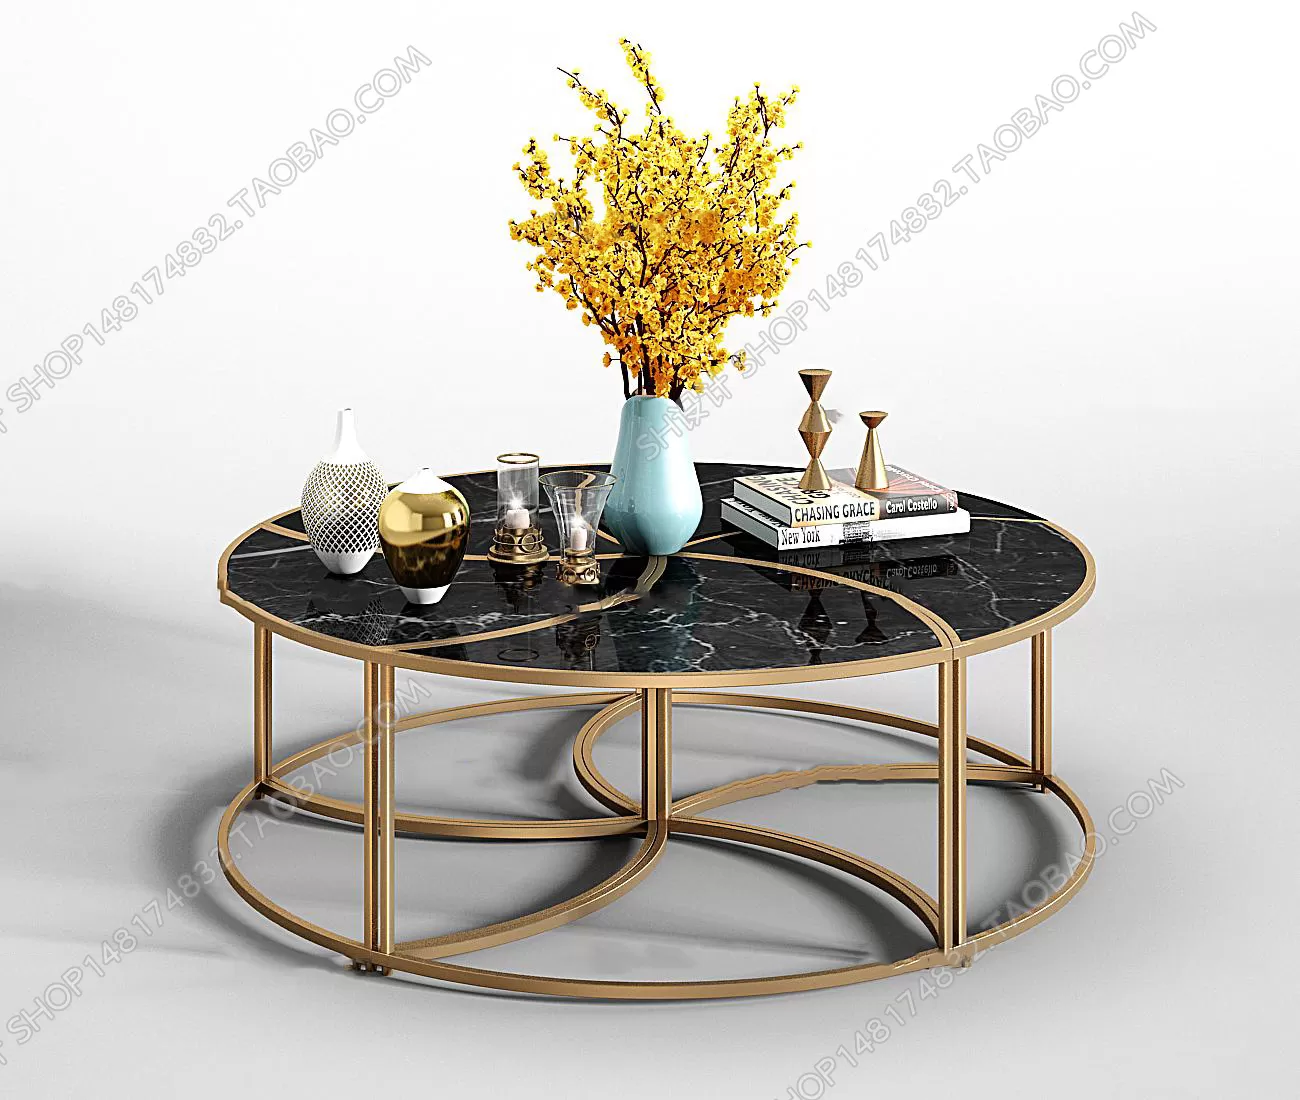 3DSKY MODELS – COFFEE TABLE 3D MODELS – 027